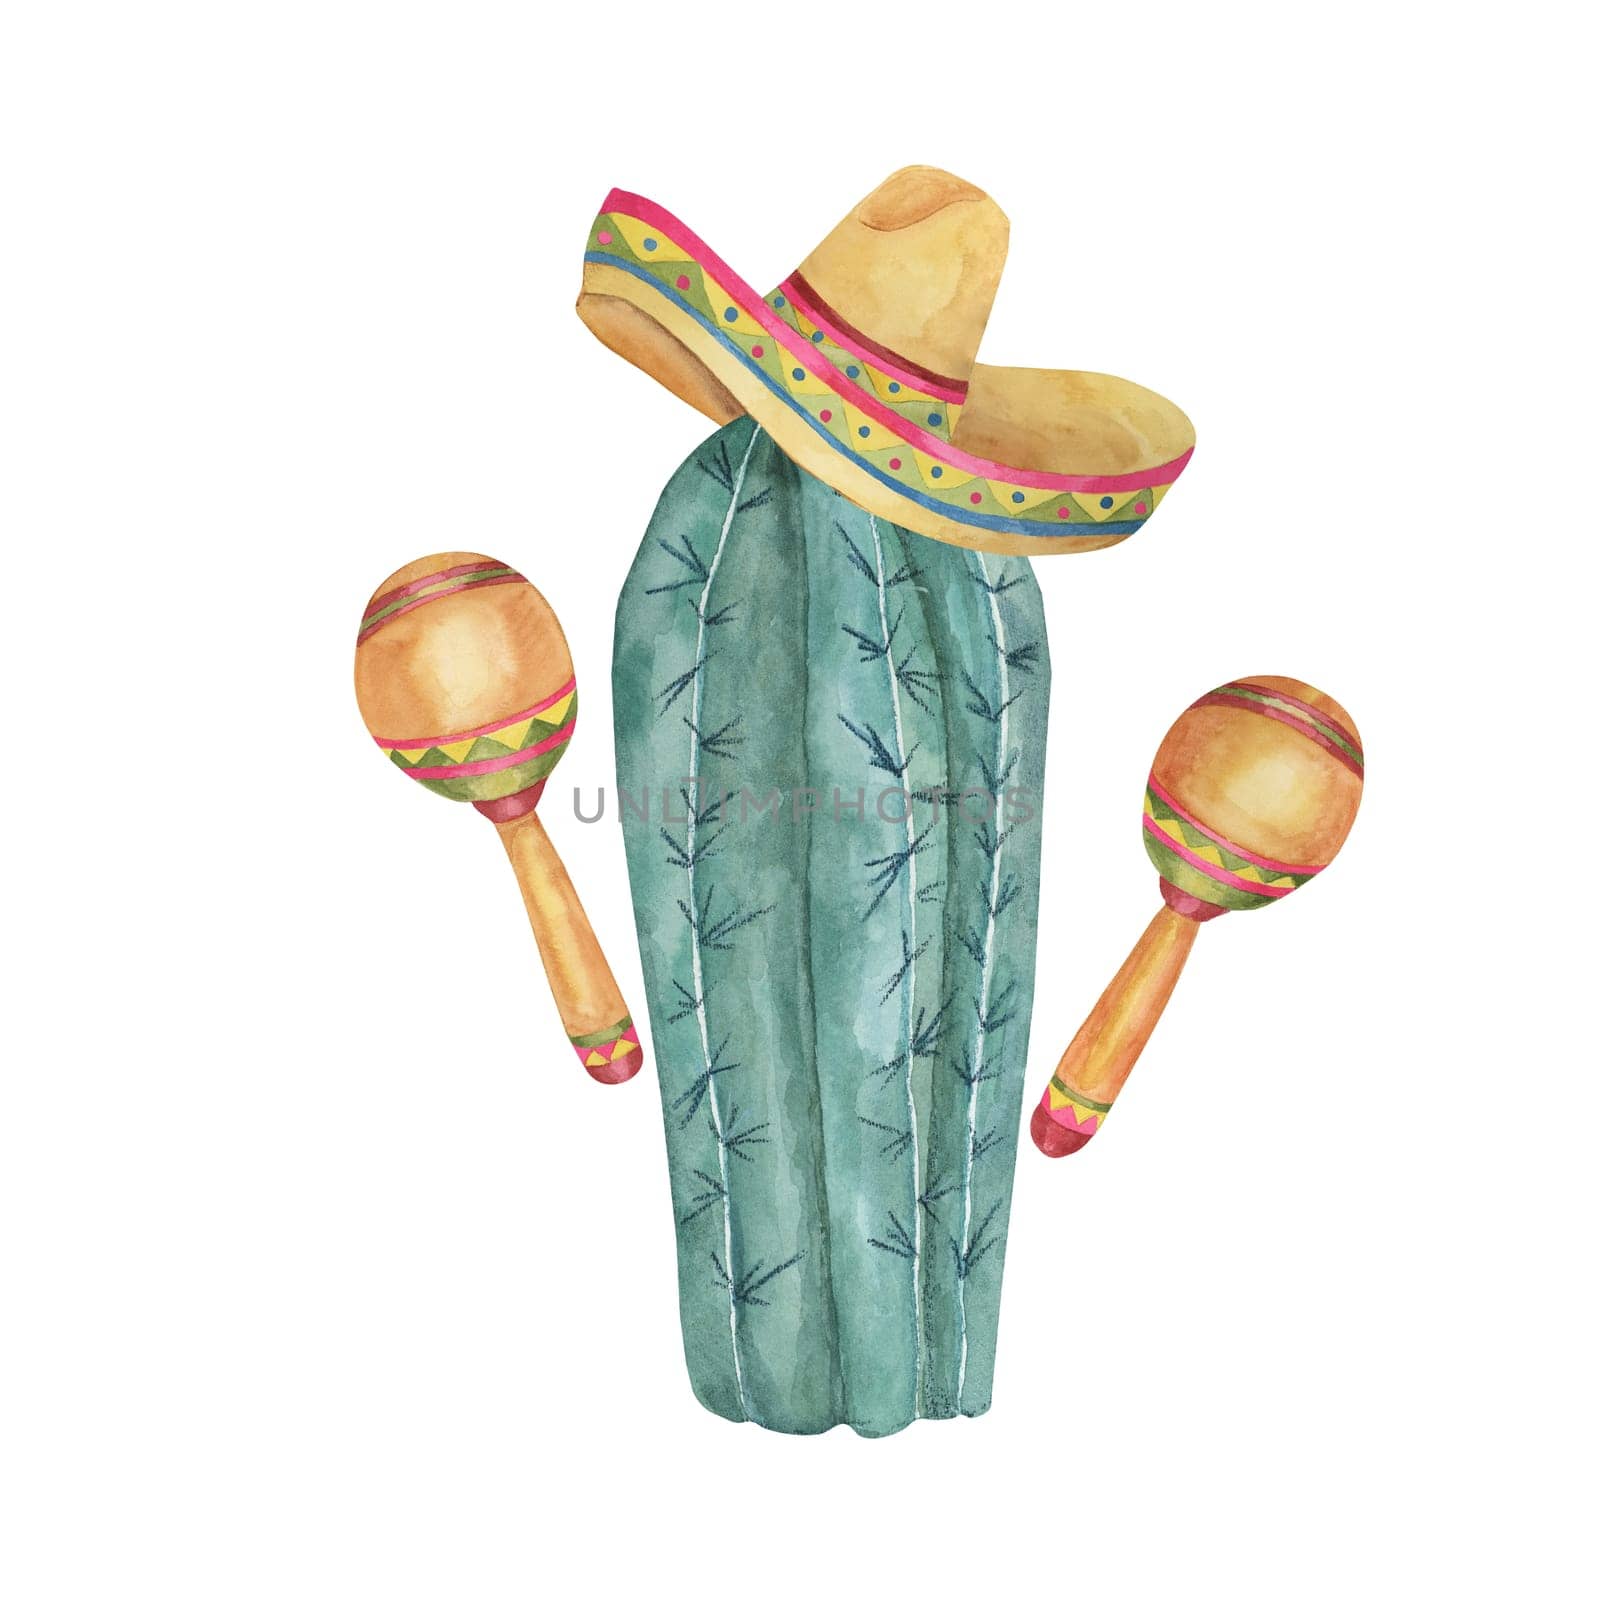 Cactus with maracas in ethnic sombrero hat by Fofito